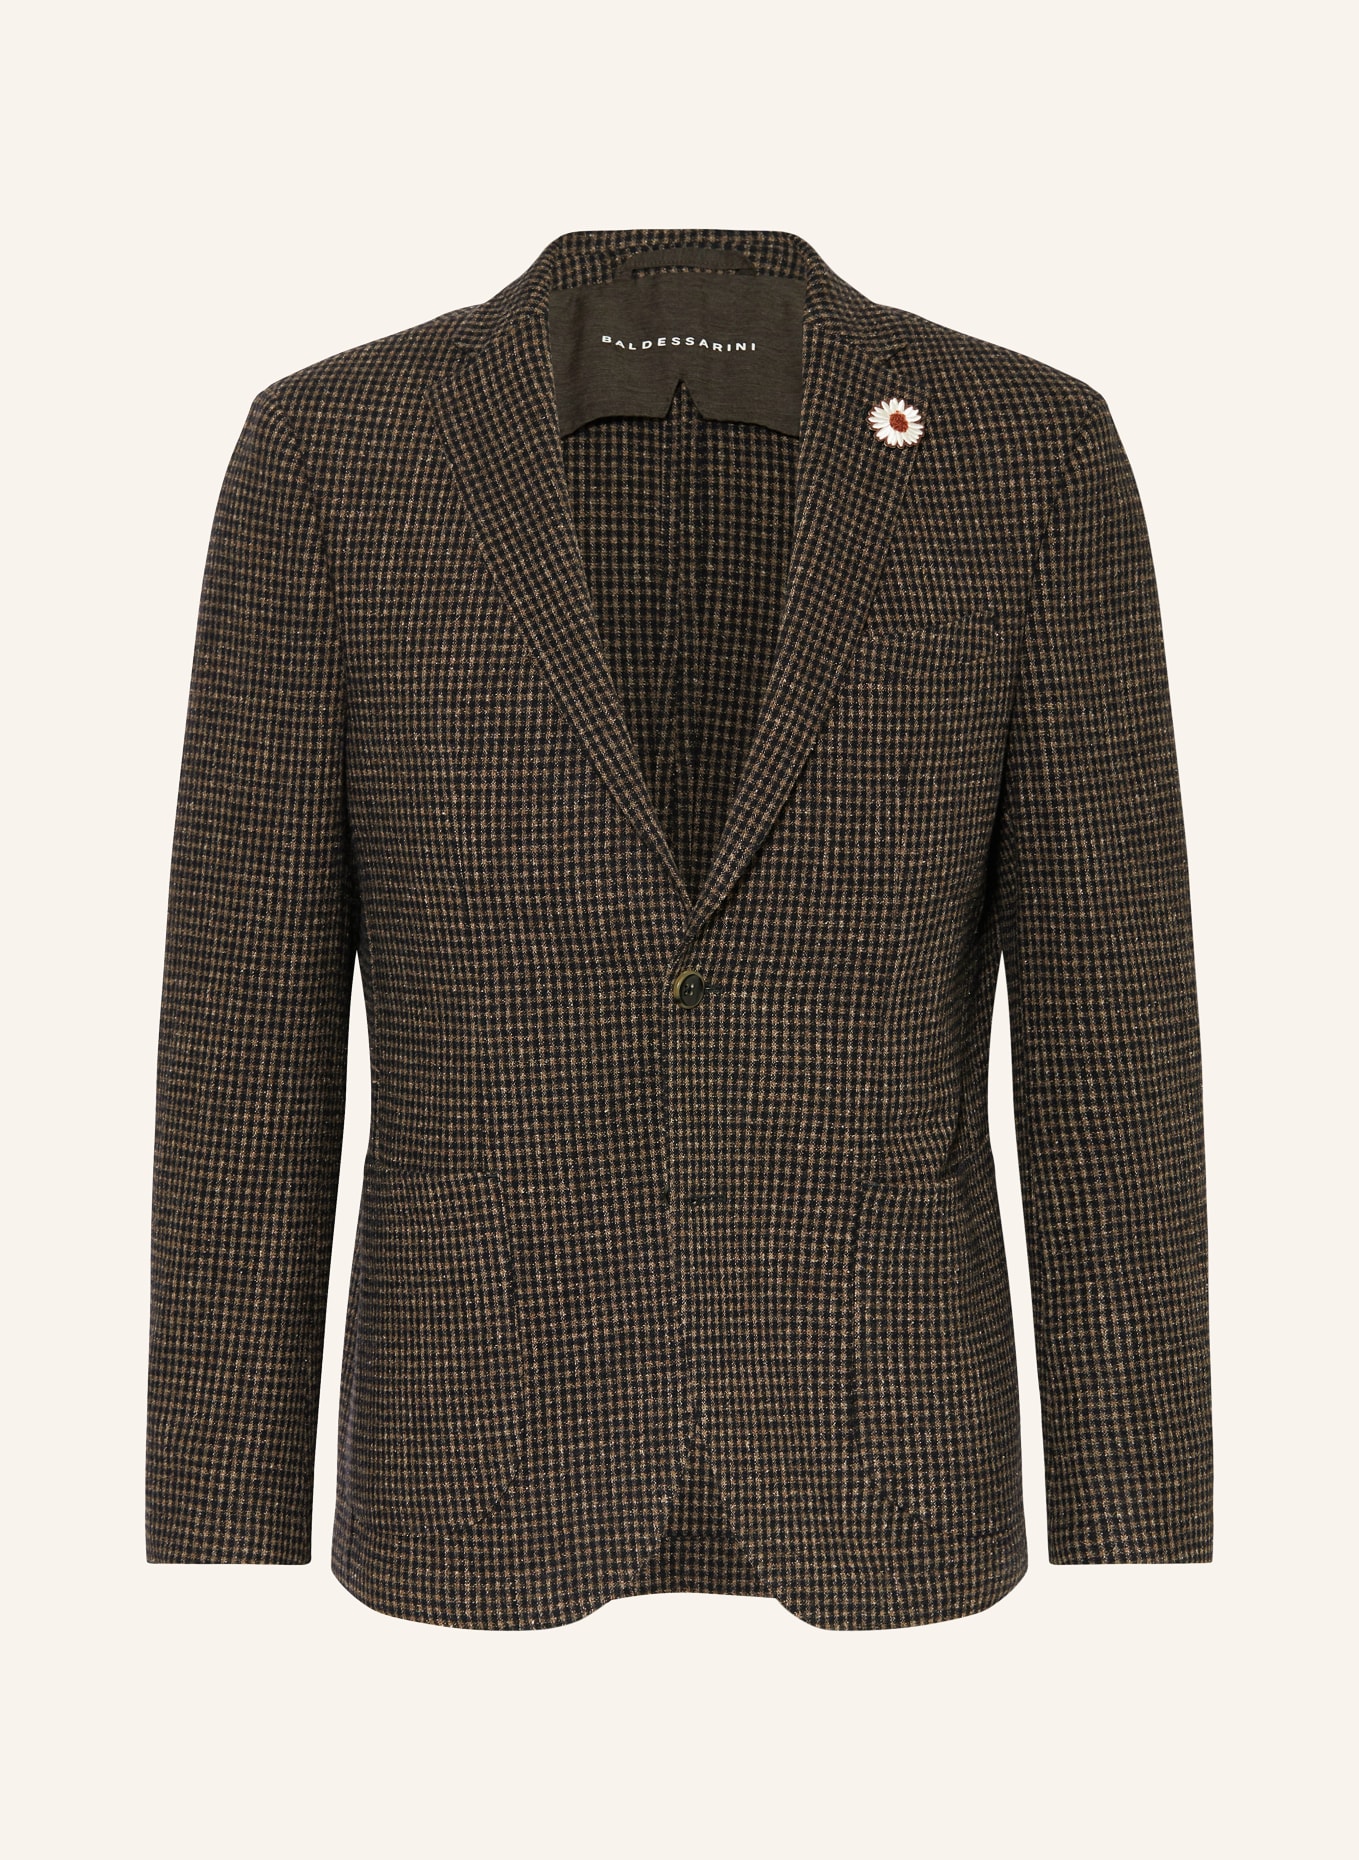 BALDESSARINI Anzugsakko Slim Fit aus Tweed, Farbe: 8617 Cappuchino Check (Bild 1)